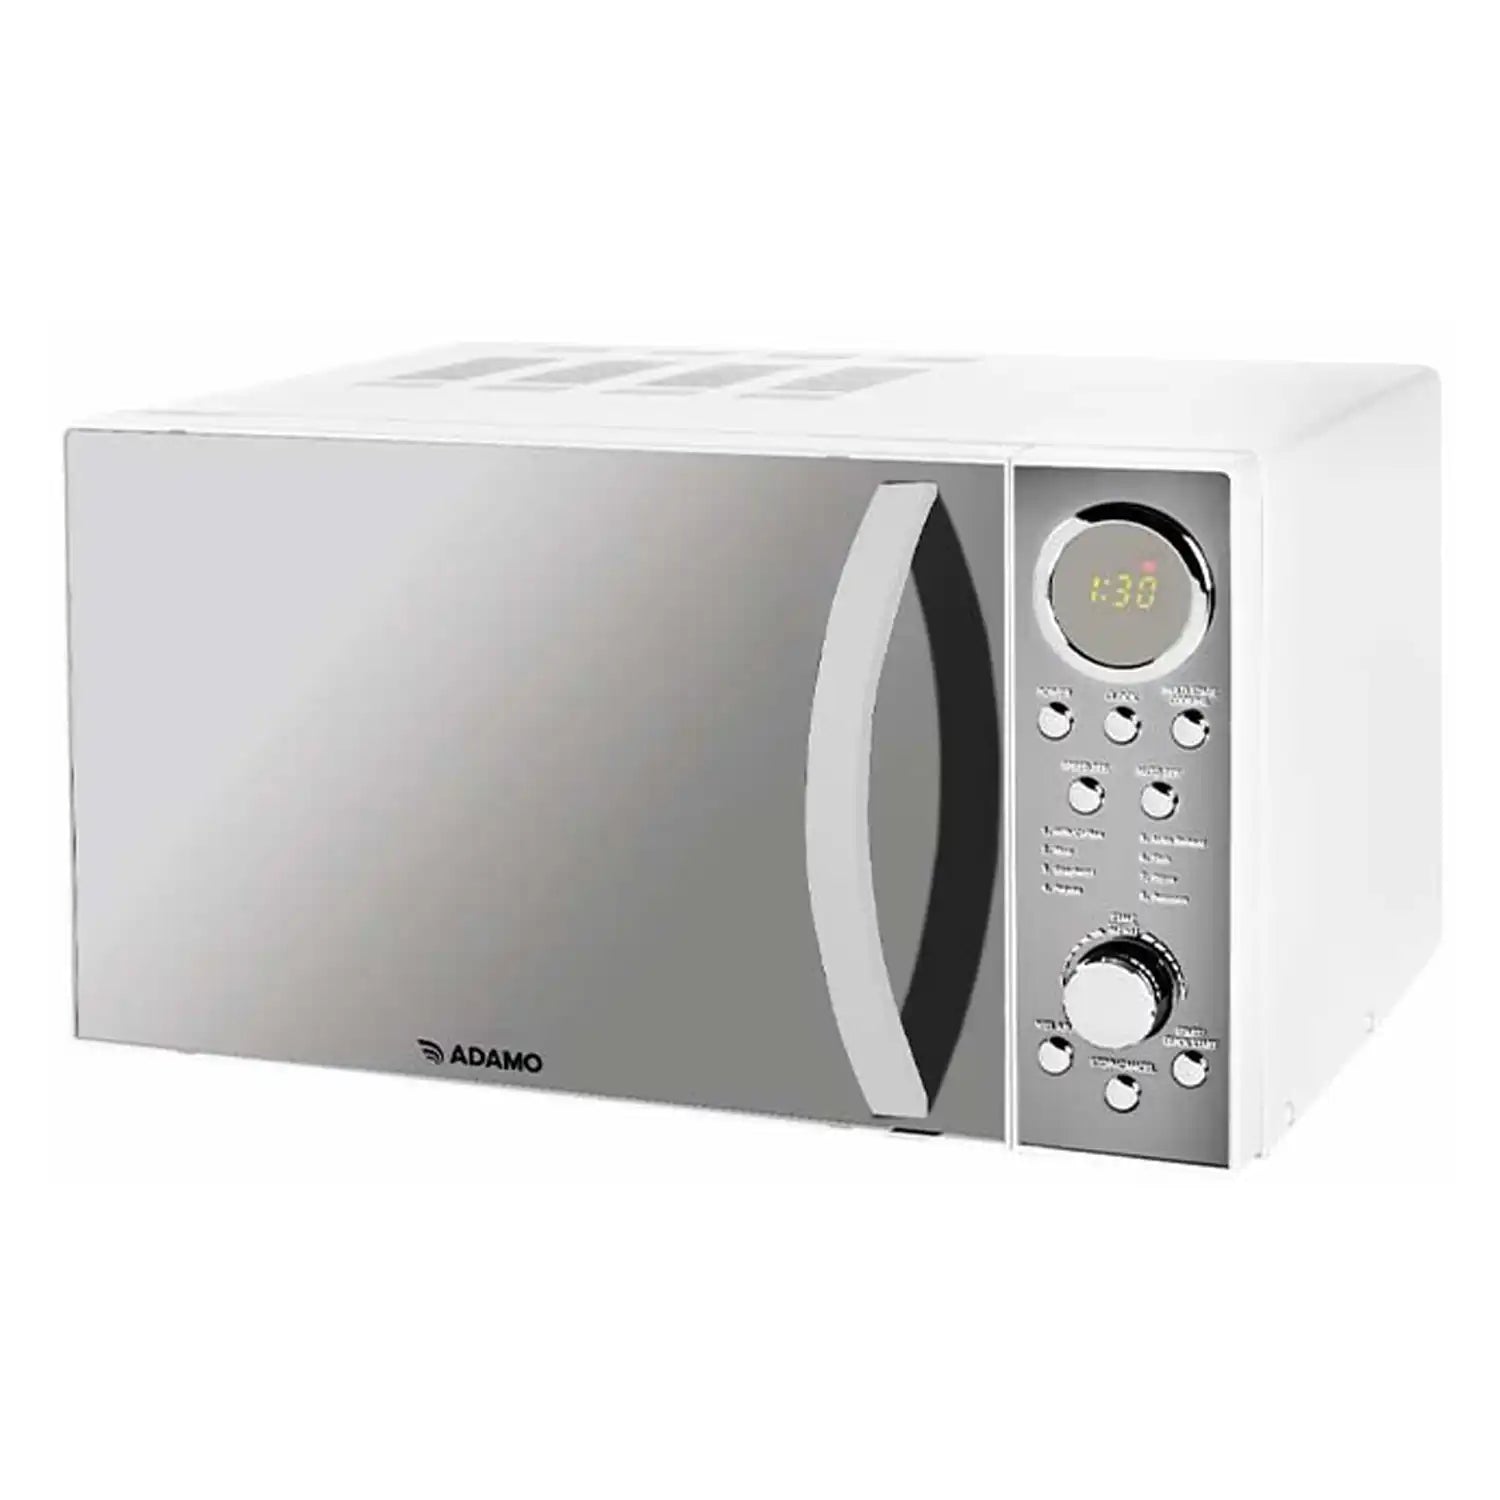 Adamo 20L Digital Microwave 700W - White 1 Shaws Department Stores